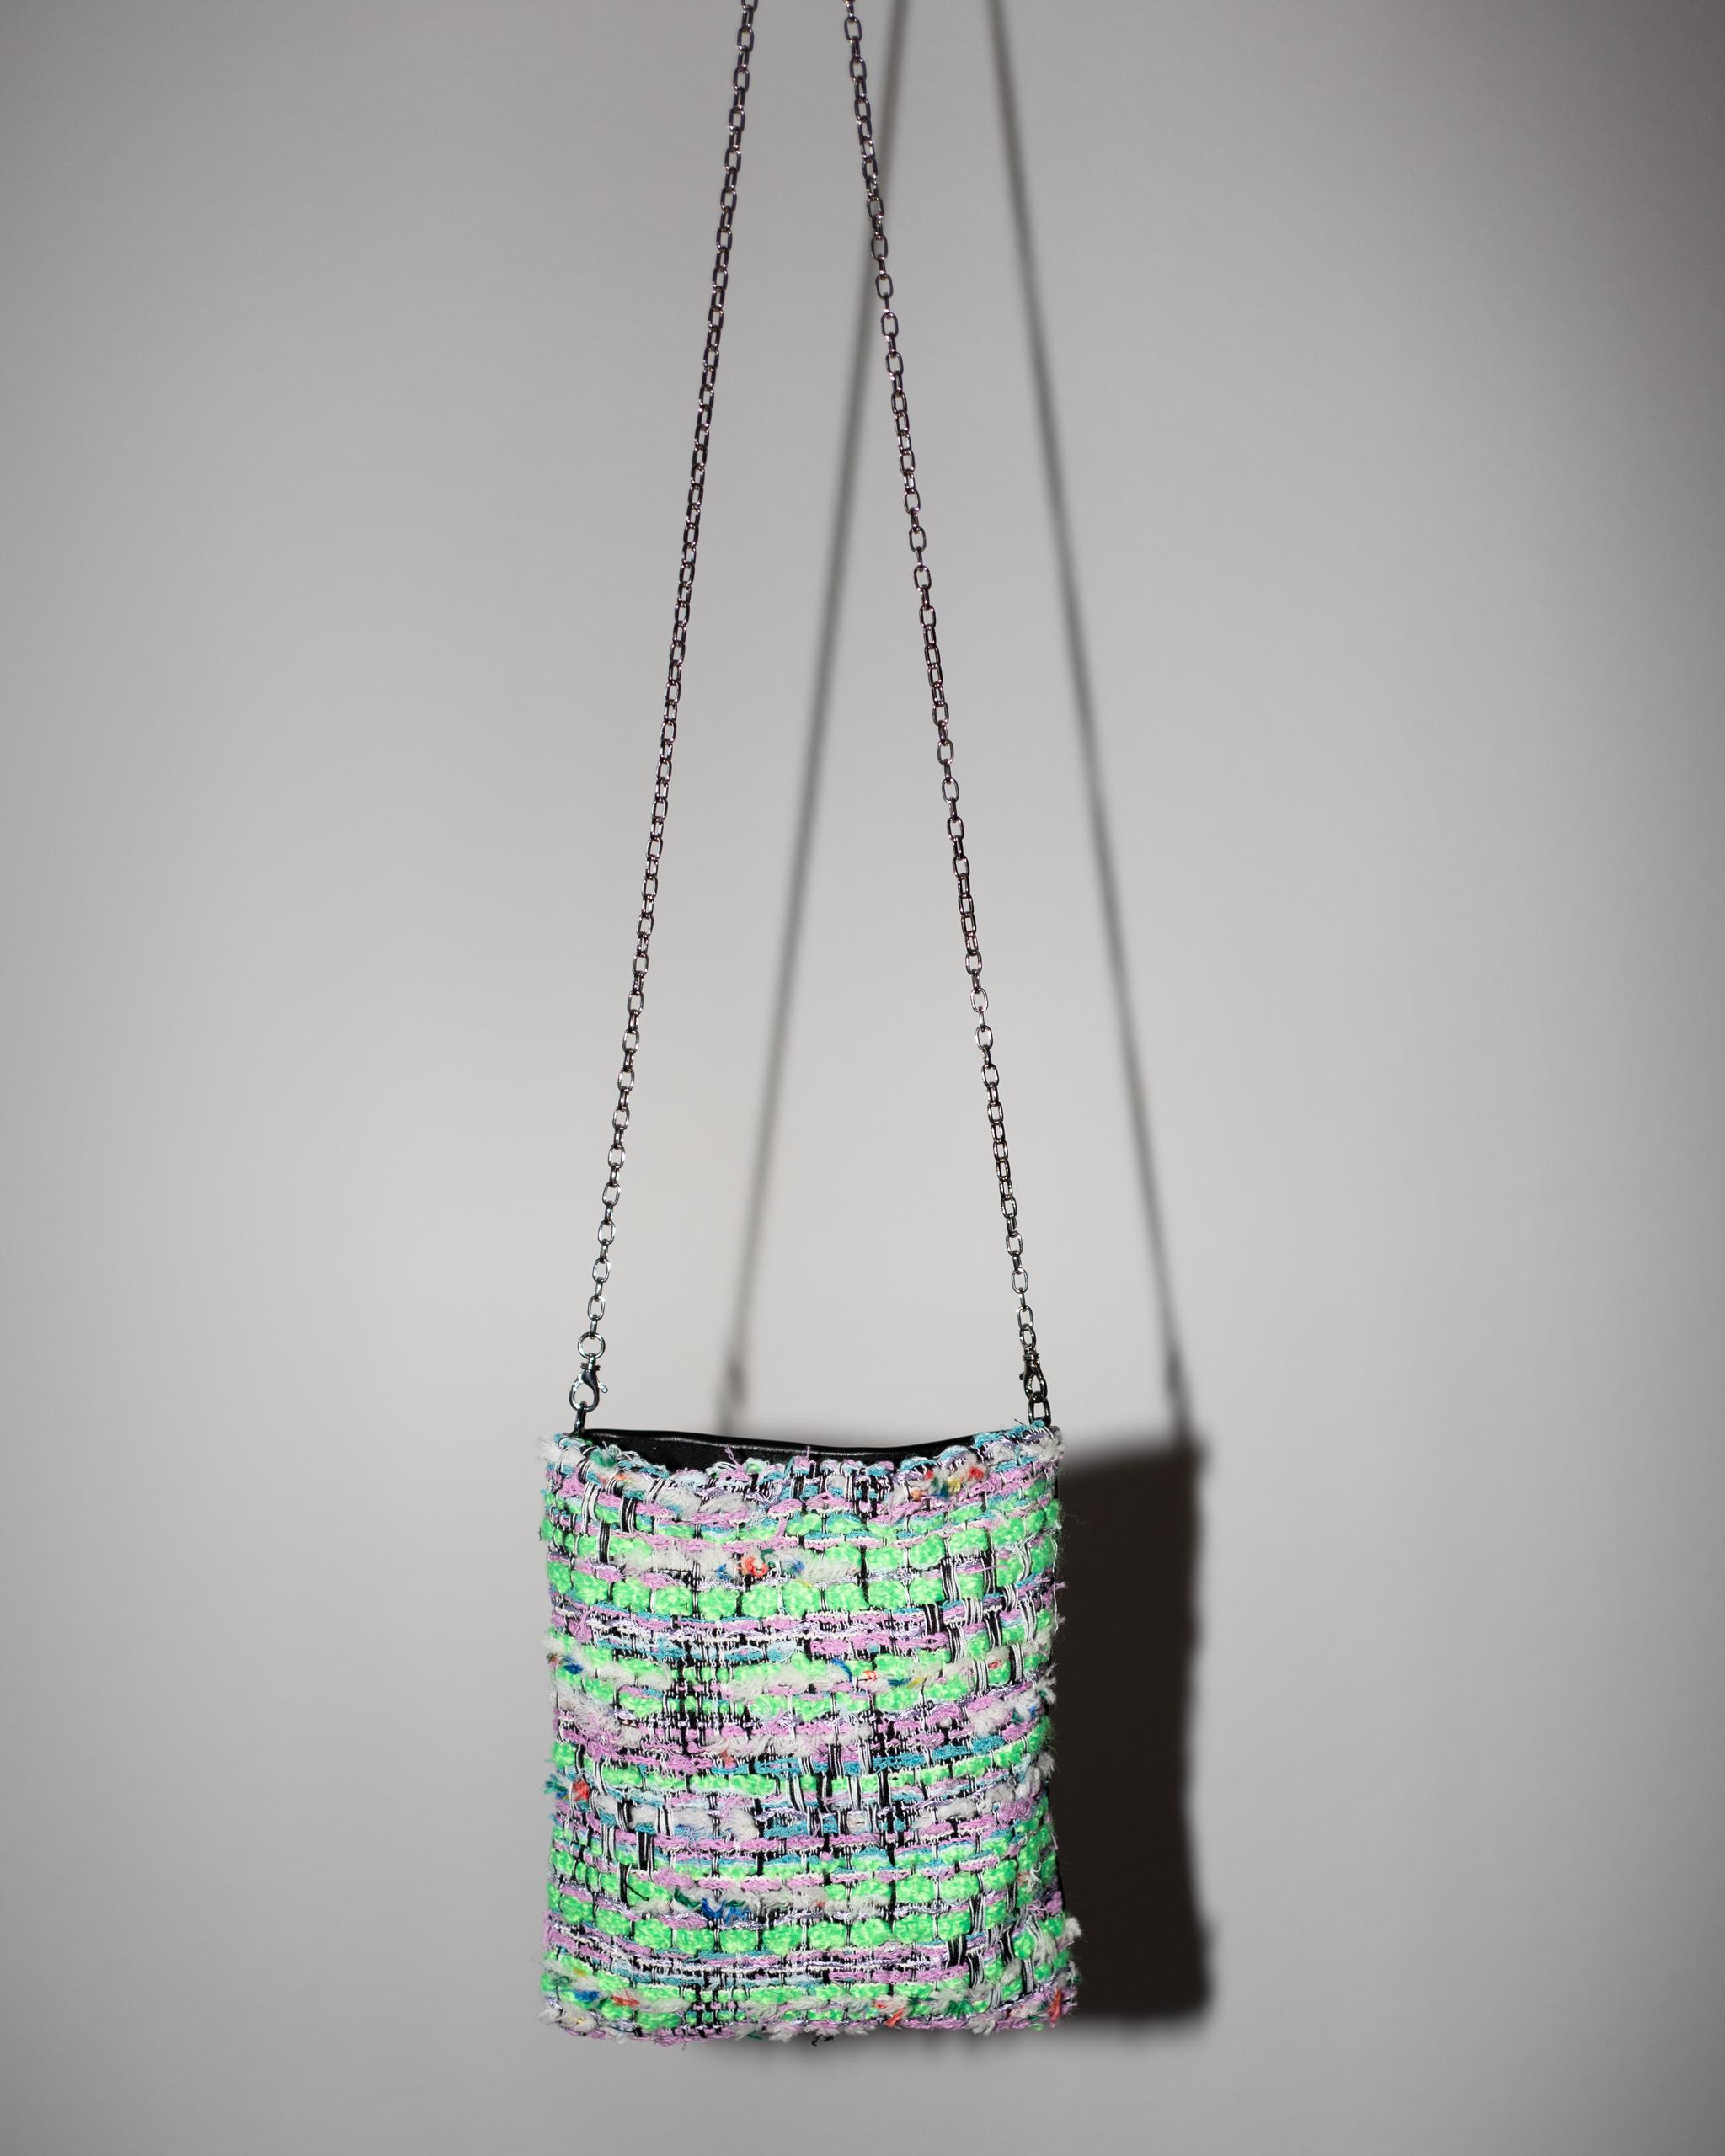 Neon Green Tweed Black Italian Napa Leather Shoulder Chain Evening Bag J Dauphin For Sale 2